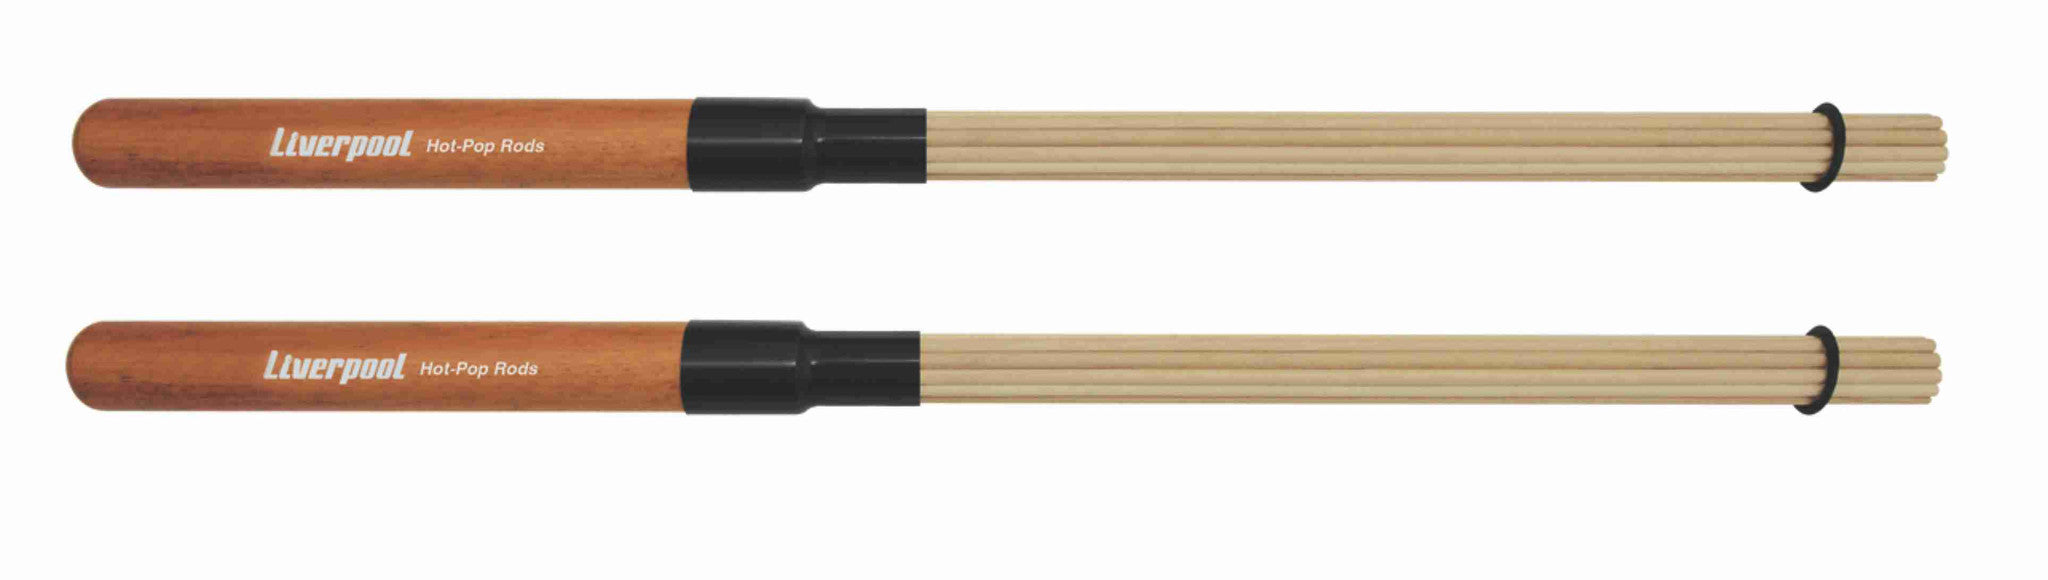 Bamboo Hot Rod Sticks - AMERICAN RECORDER TECHNOLOGIES, INC.